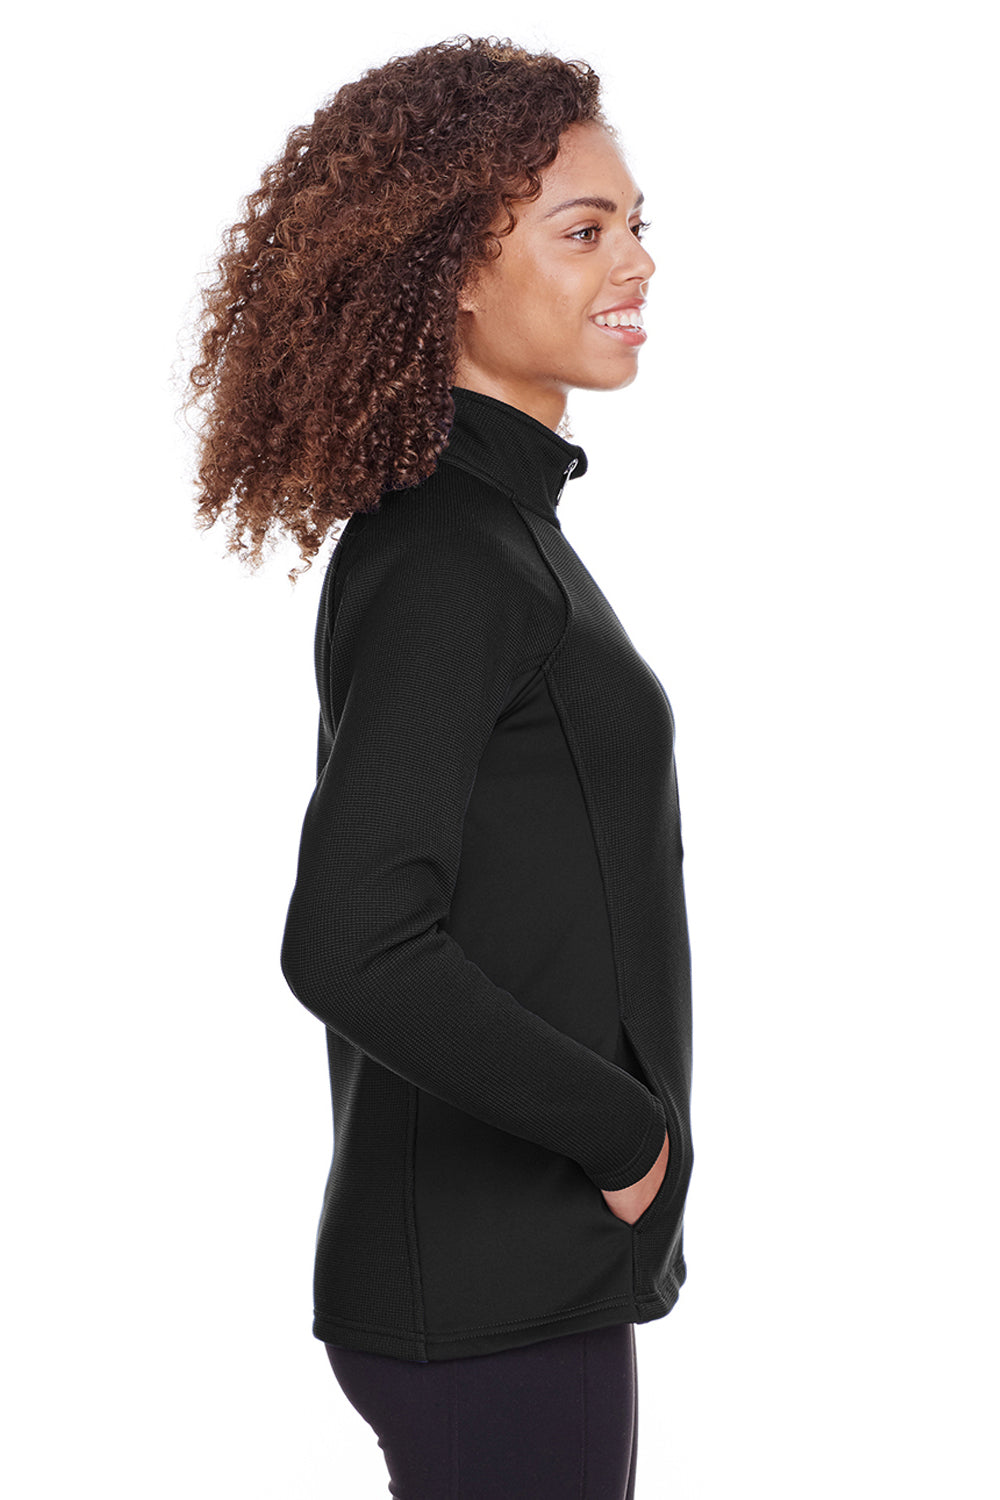 Spyder S16562 Womens Constant 1/4 Zip Sweater Black Side